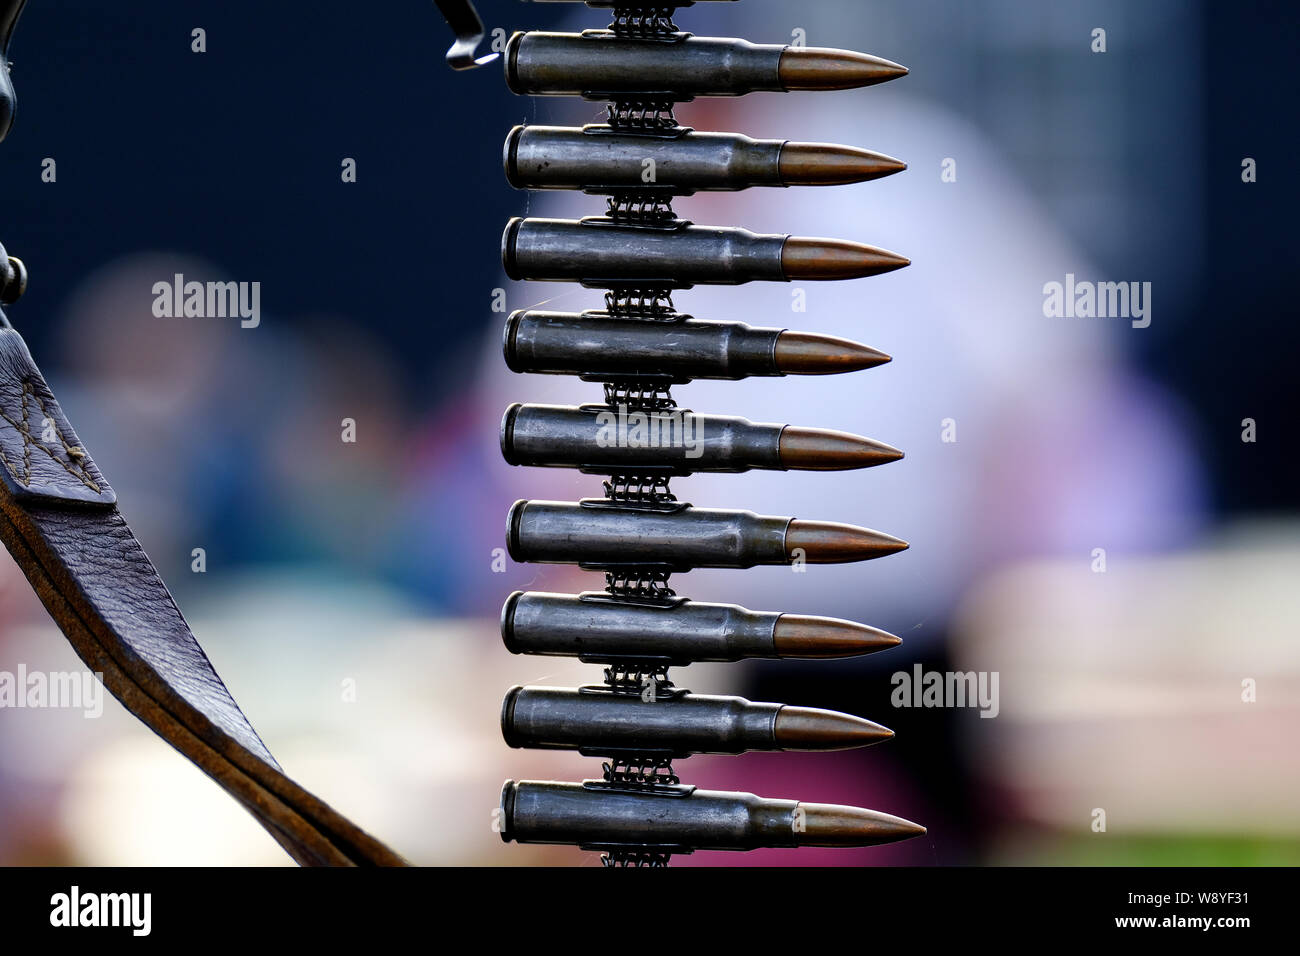 7.92 machine gun bullets in link for vintage MG 34 German machine gun. Stock Photo